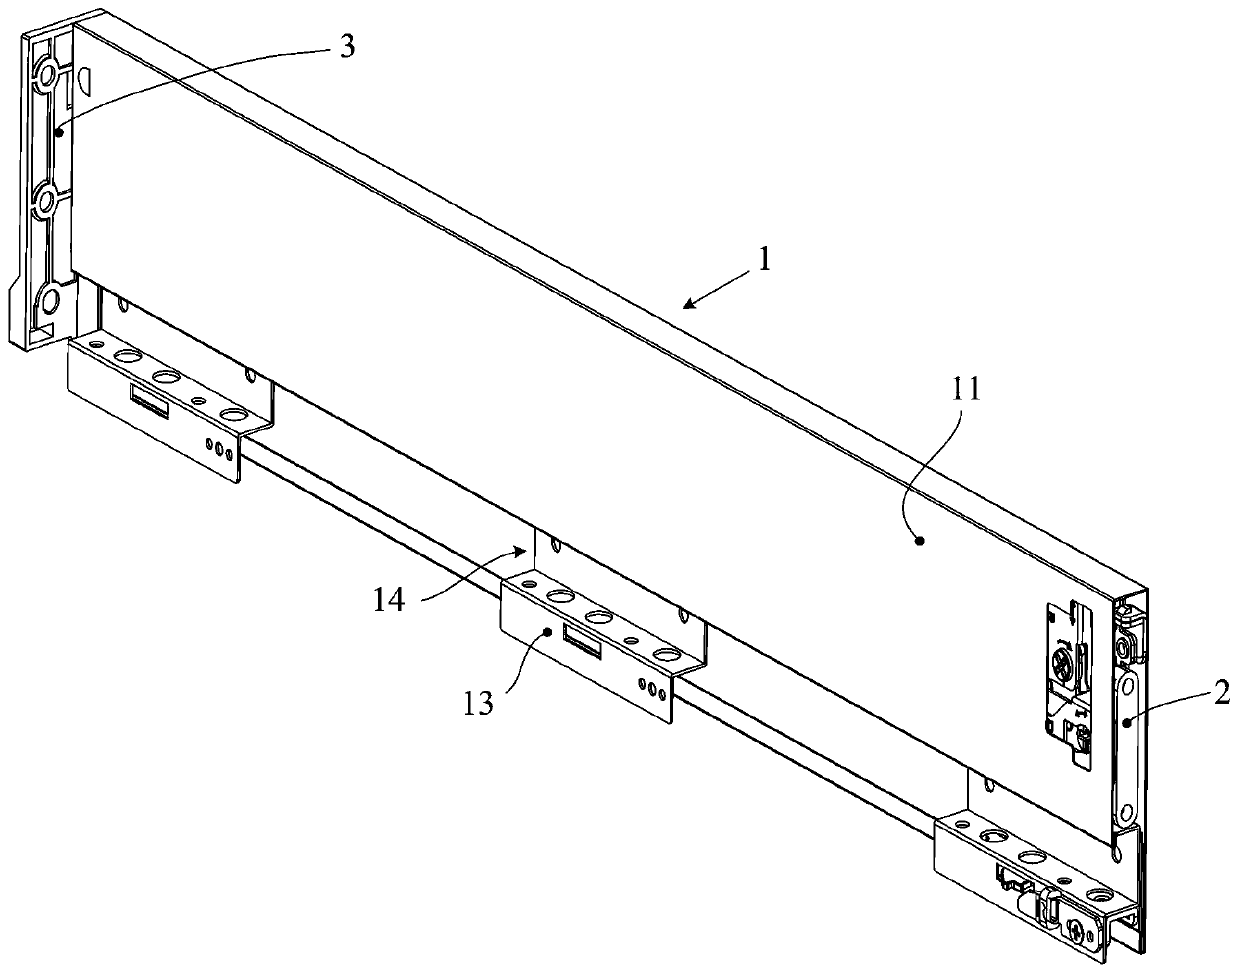 Side plate structure of novel drawer slide rail